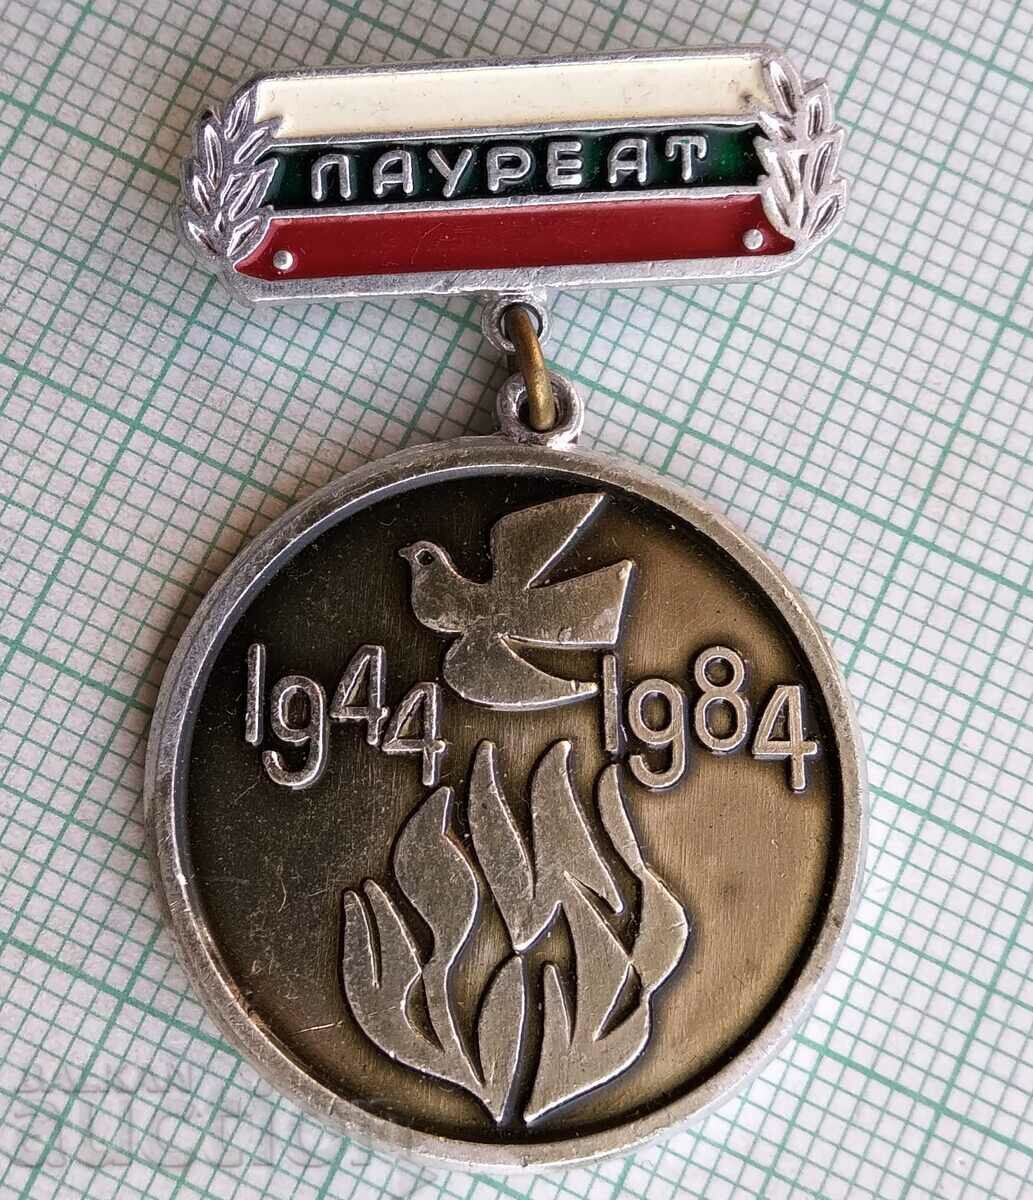 11545 Значка - Лауреат 1944-1984